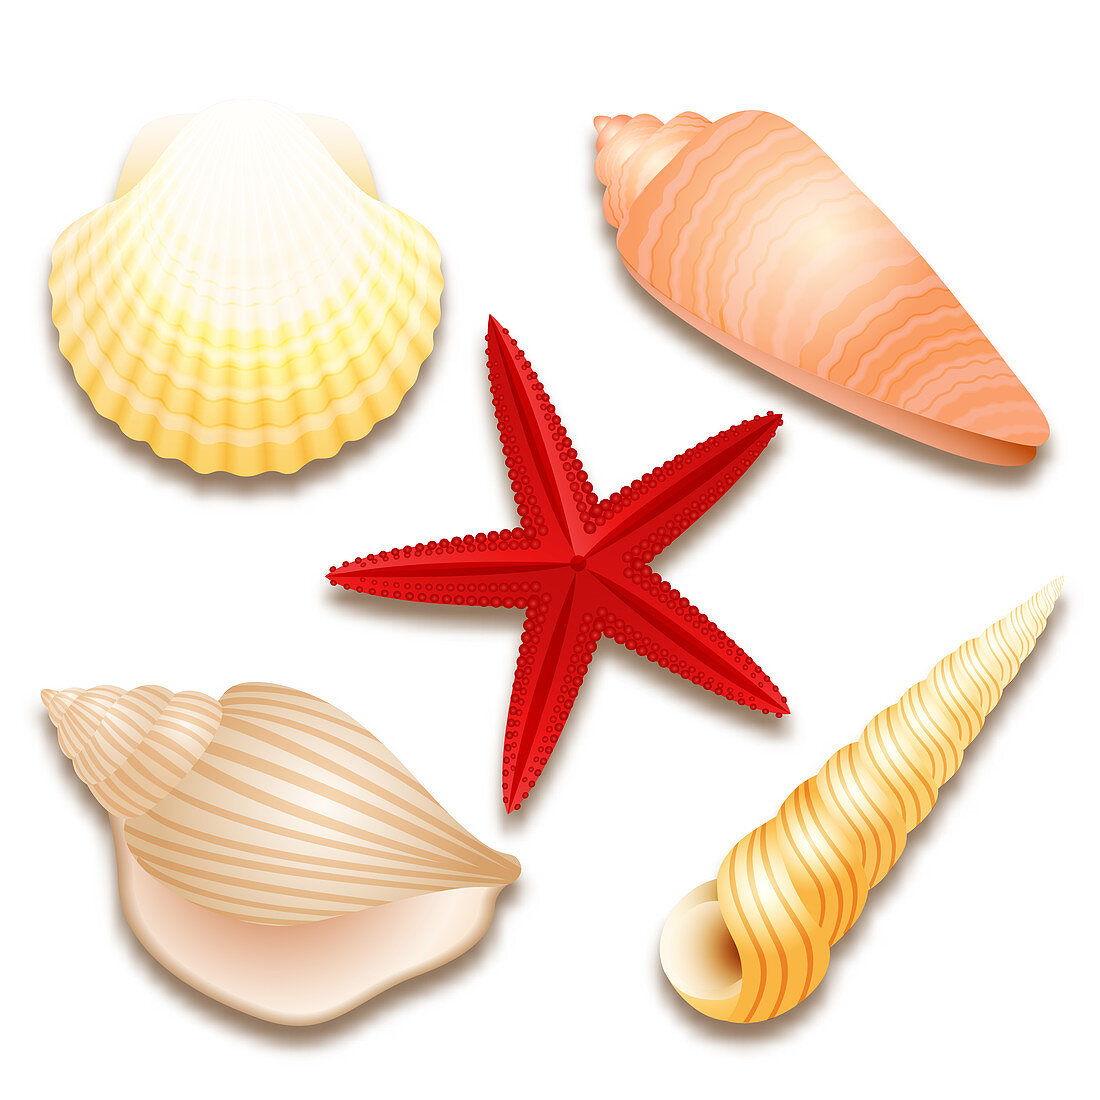 Seashells and starfish, illustration